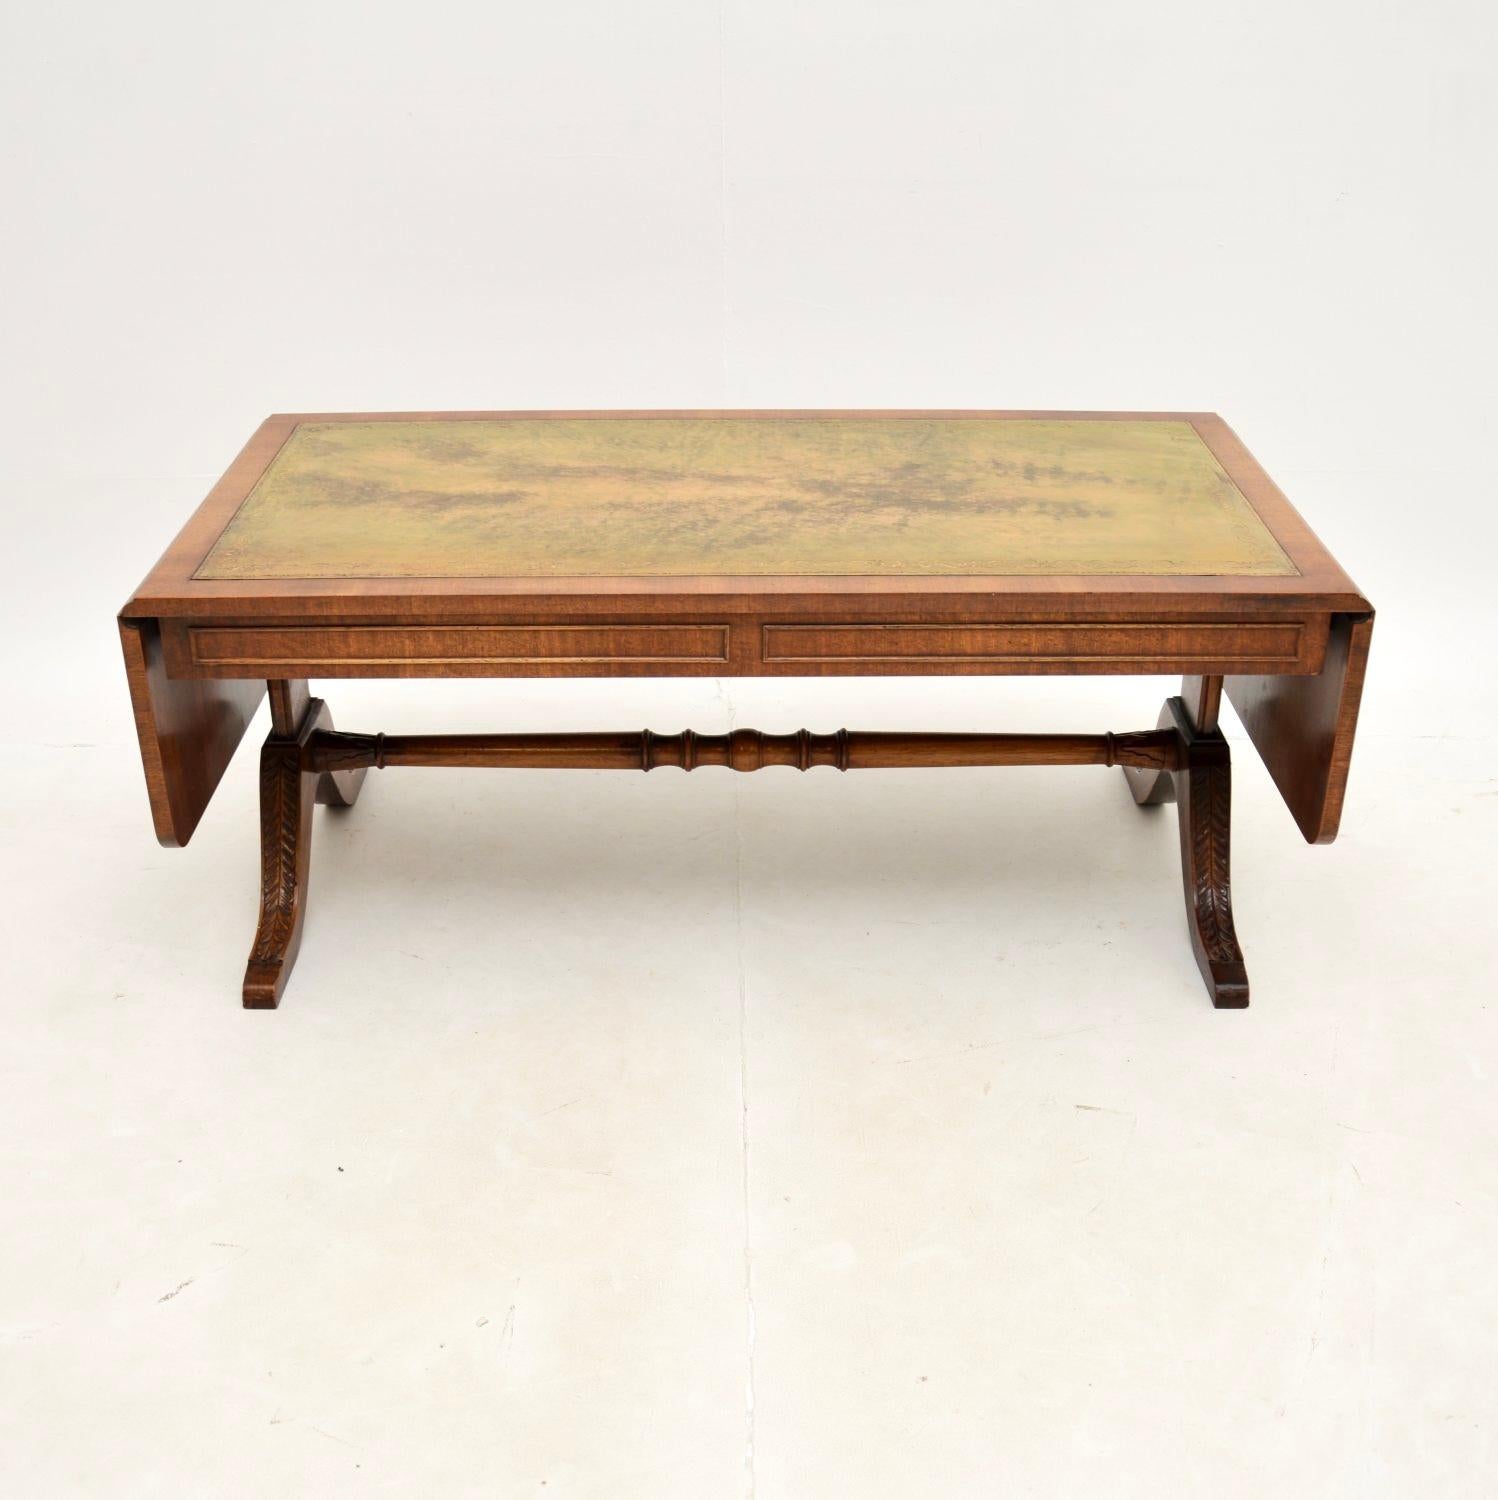 British Antique Regency Style Drop Leaf Coffee Table